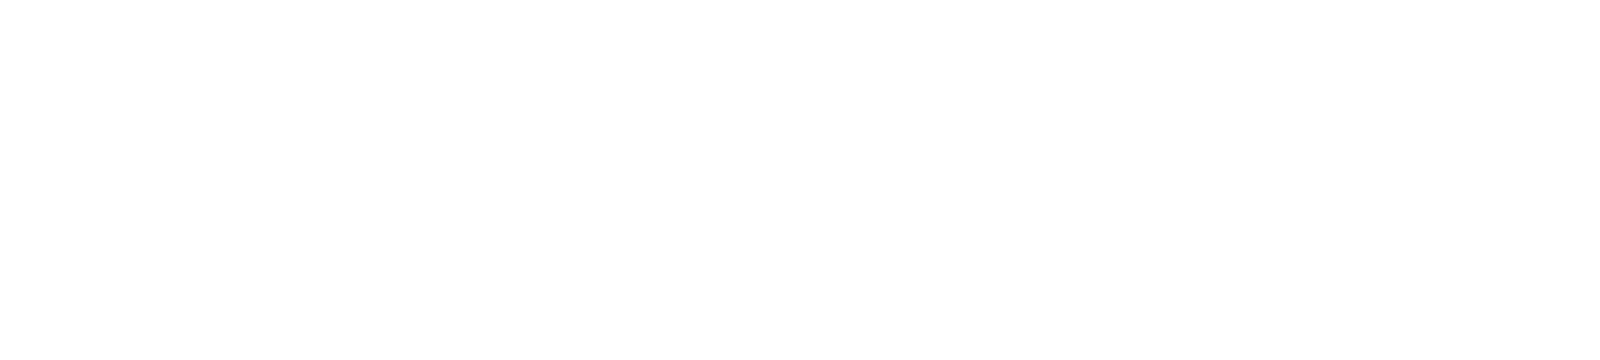 Hair inn TAKAKURA